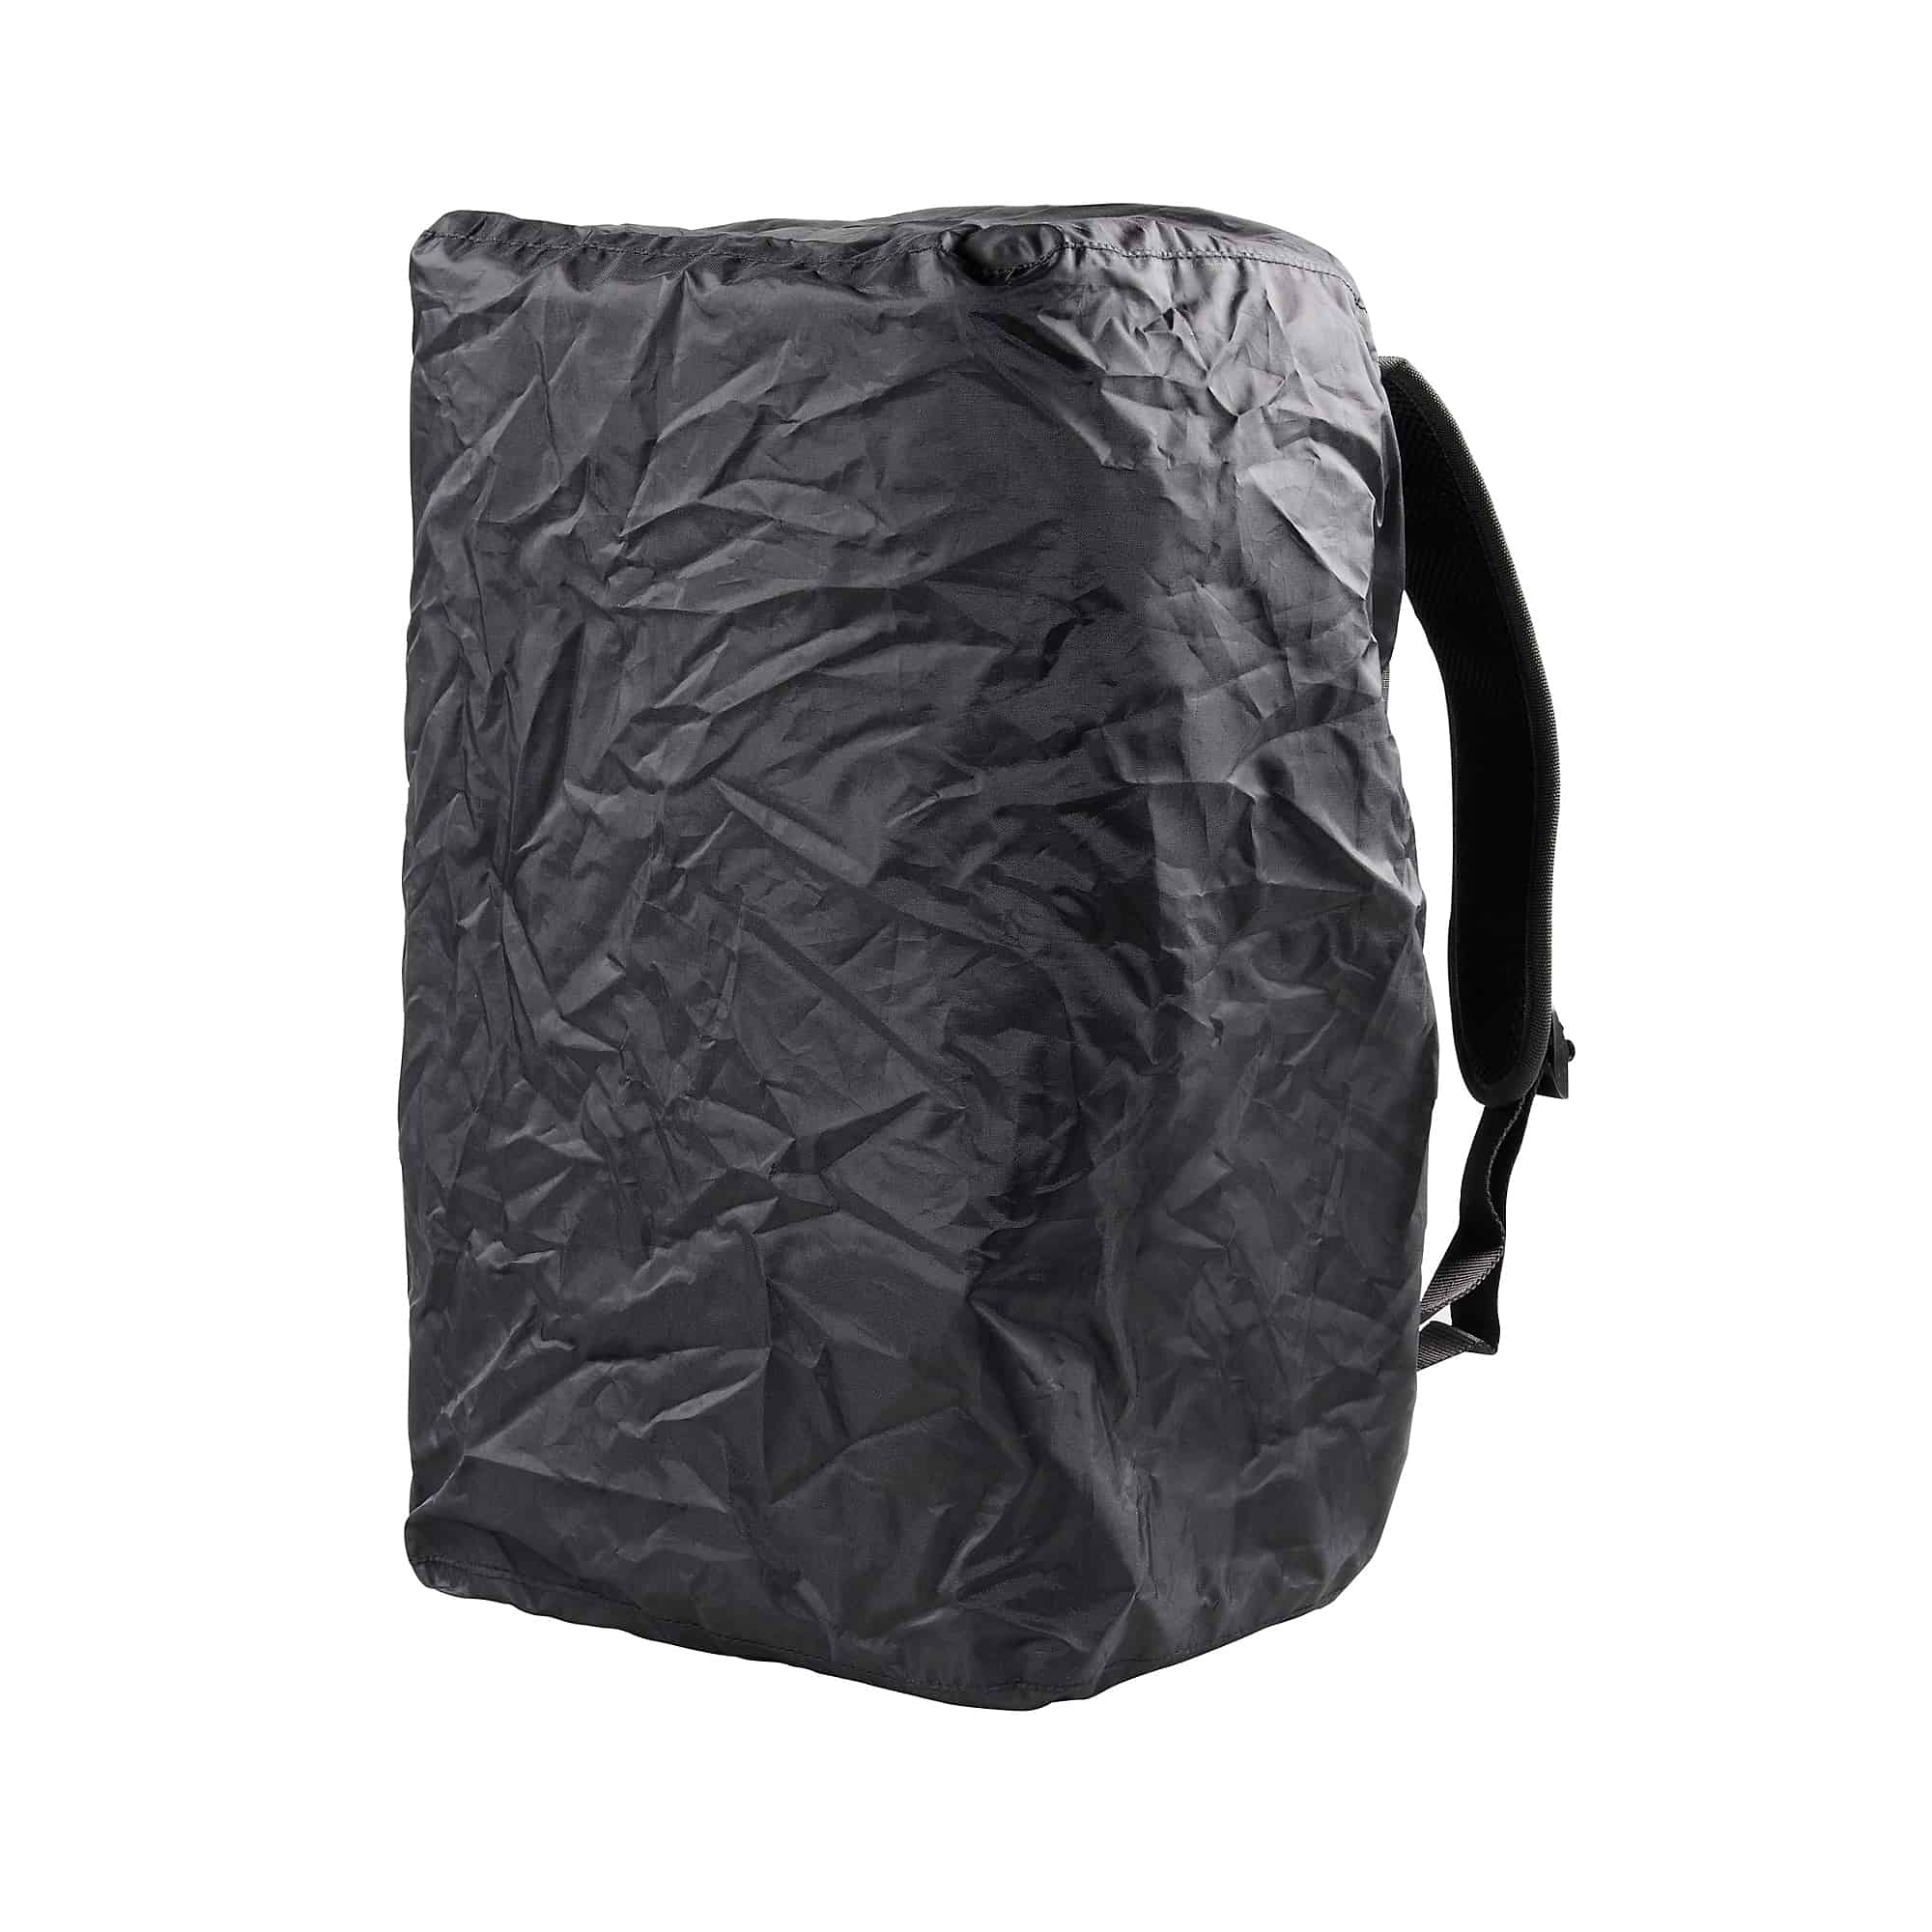 Abu Garica Backpack Bag With 3 Boxes